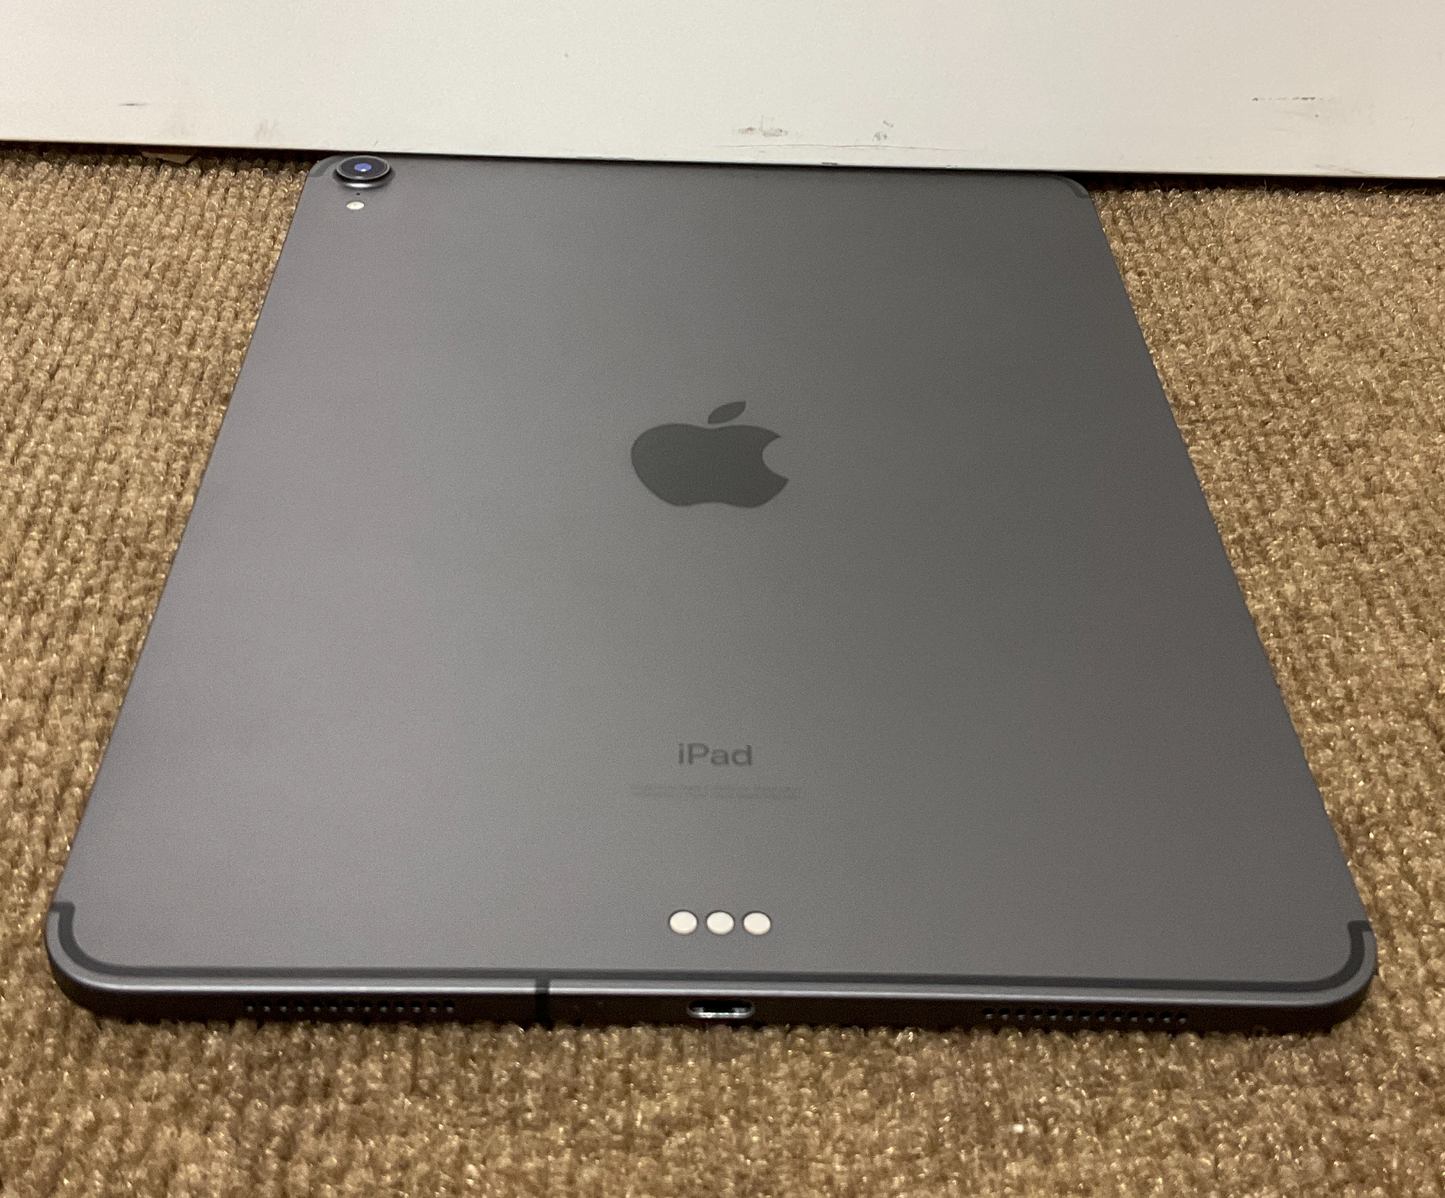 ♥ New, Open Box - iPad Pro 11" 64GB Wi-Fi + 4G LTE Space Gray MU0P2LL/A (2018)